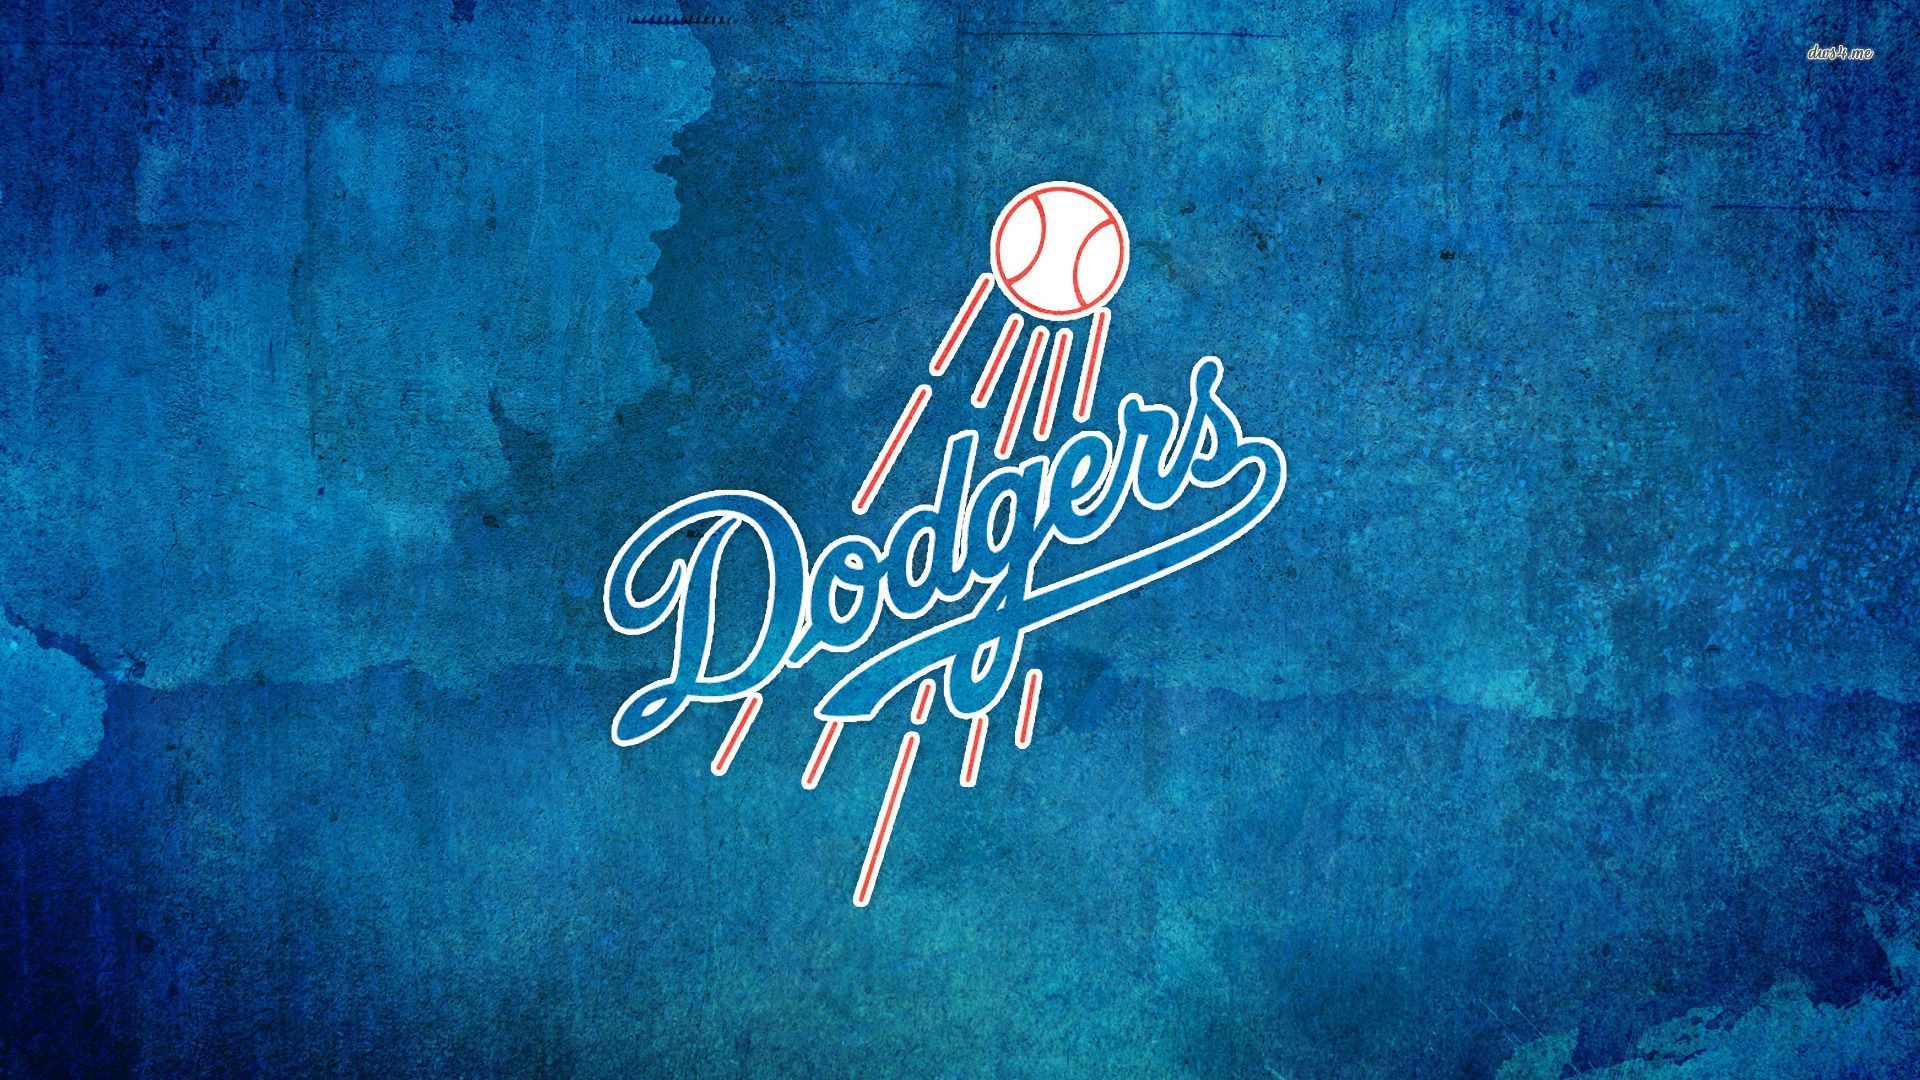 Los Angeles Dodgers wallpaper - Sport wallpapers -